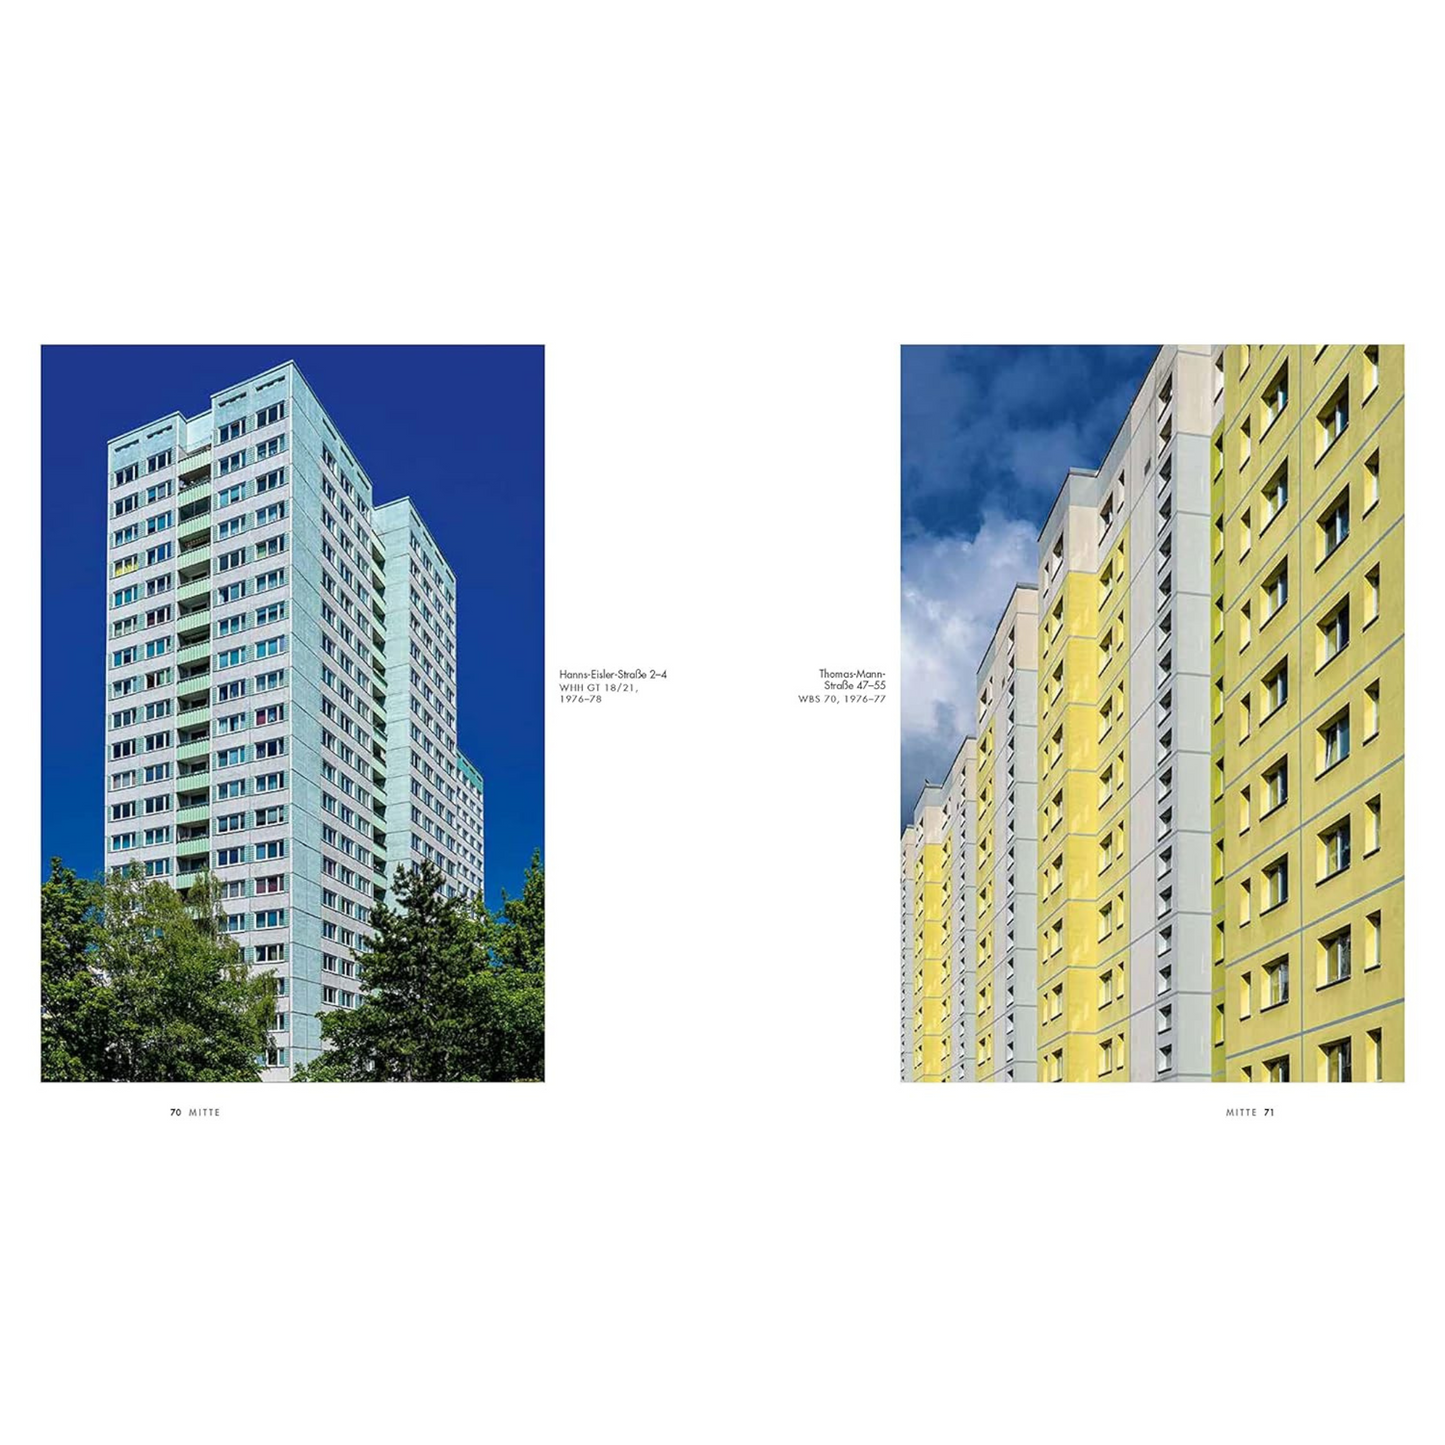 Plattenbau Berlin: Urban Residential Architecture - A Photographic Journey